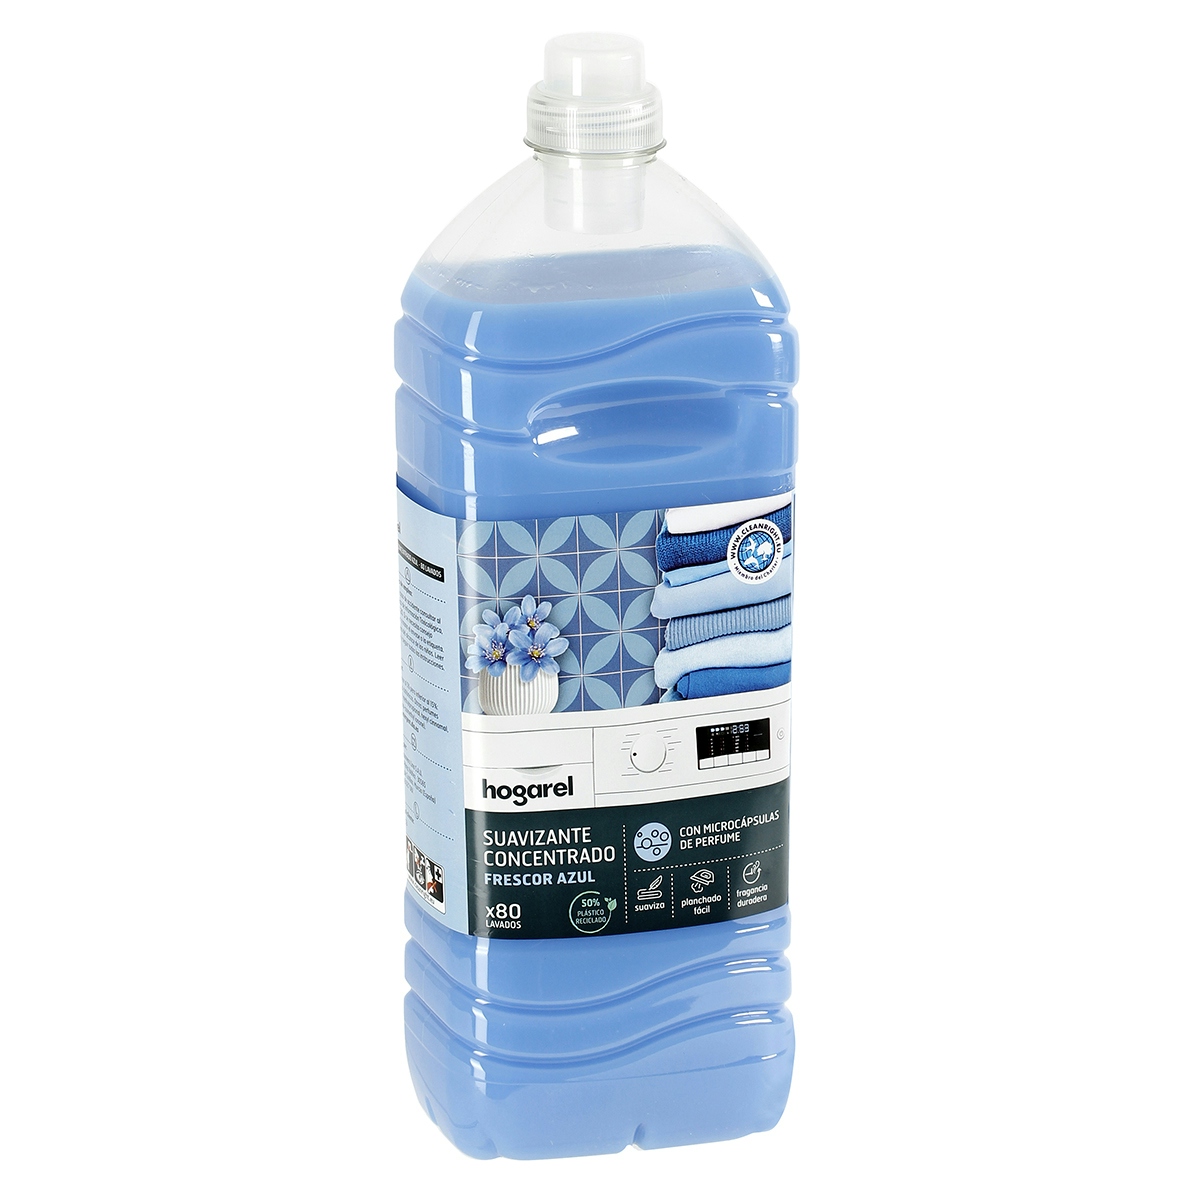 Suavizante Concentrado Azul Hogarel 2 L 80 lavados